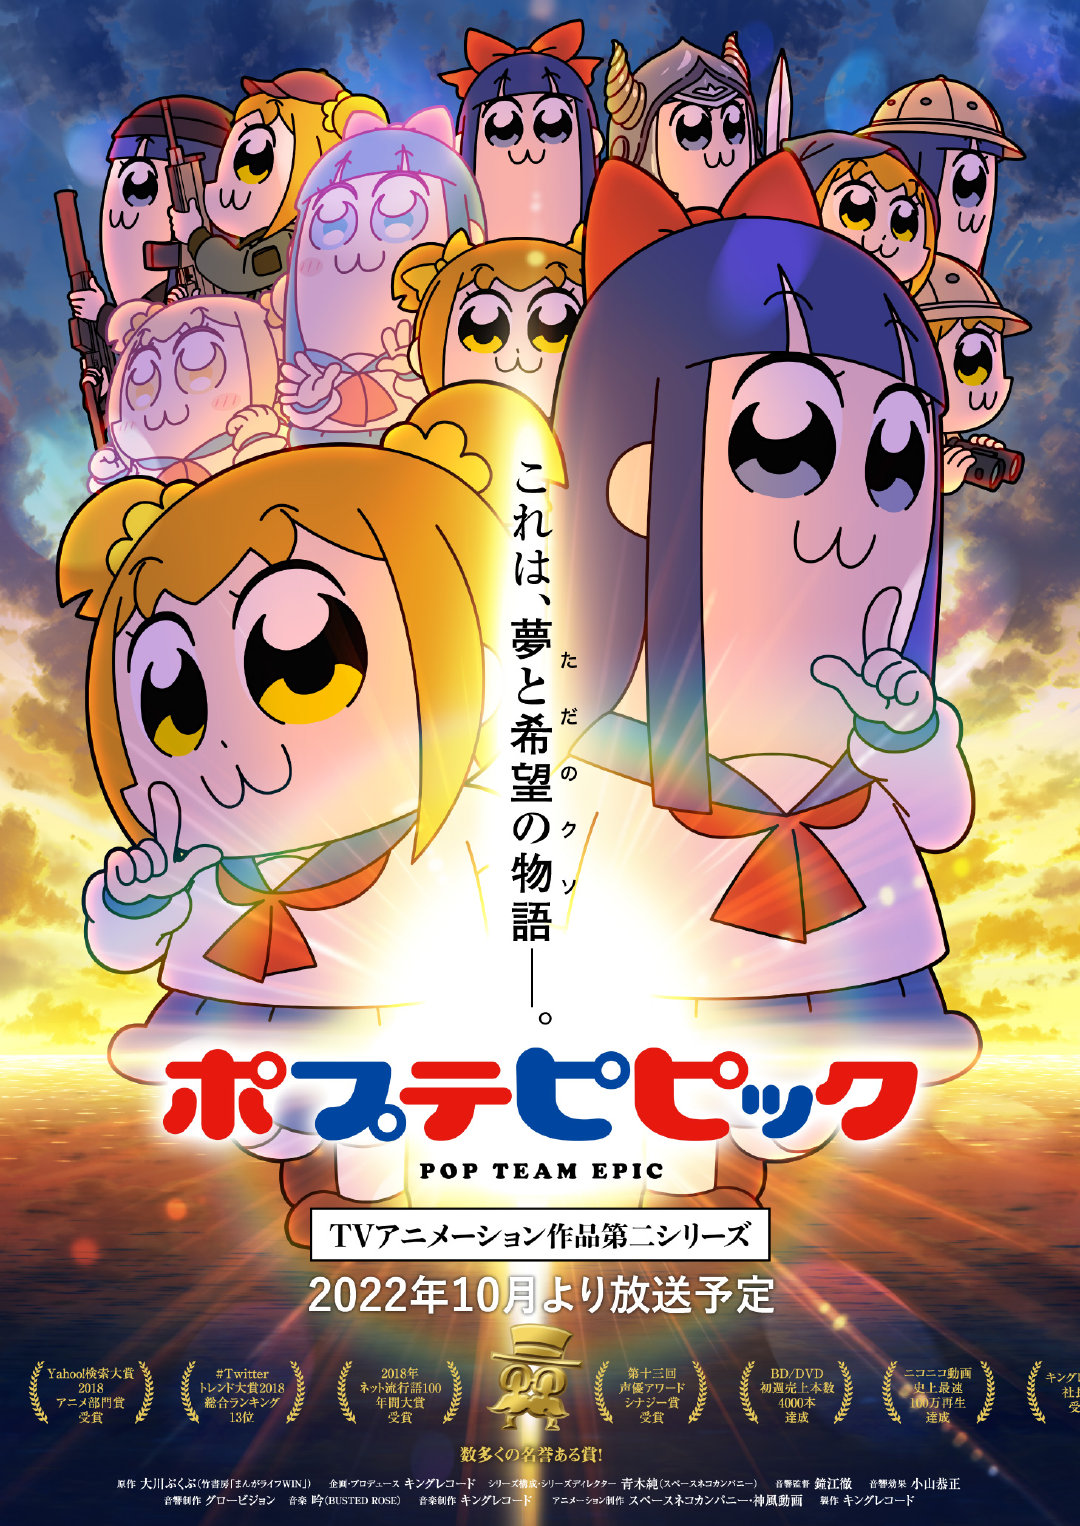 TV动画《POP TEAM EPIC》第二季主视觉图公开，2022年10月开播。 ​​​​